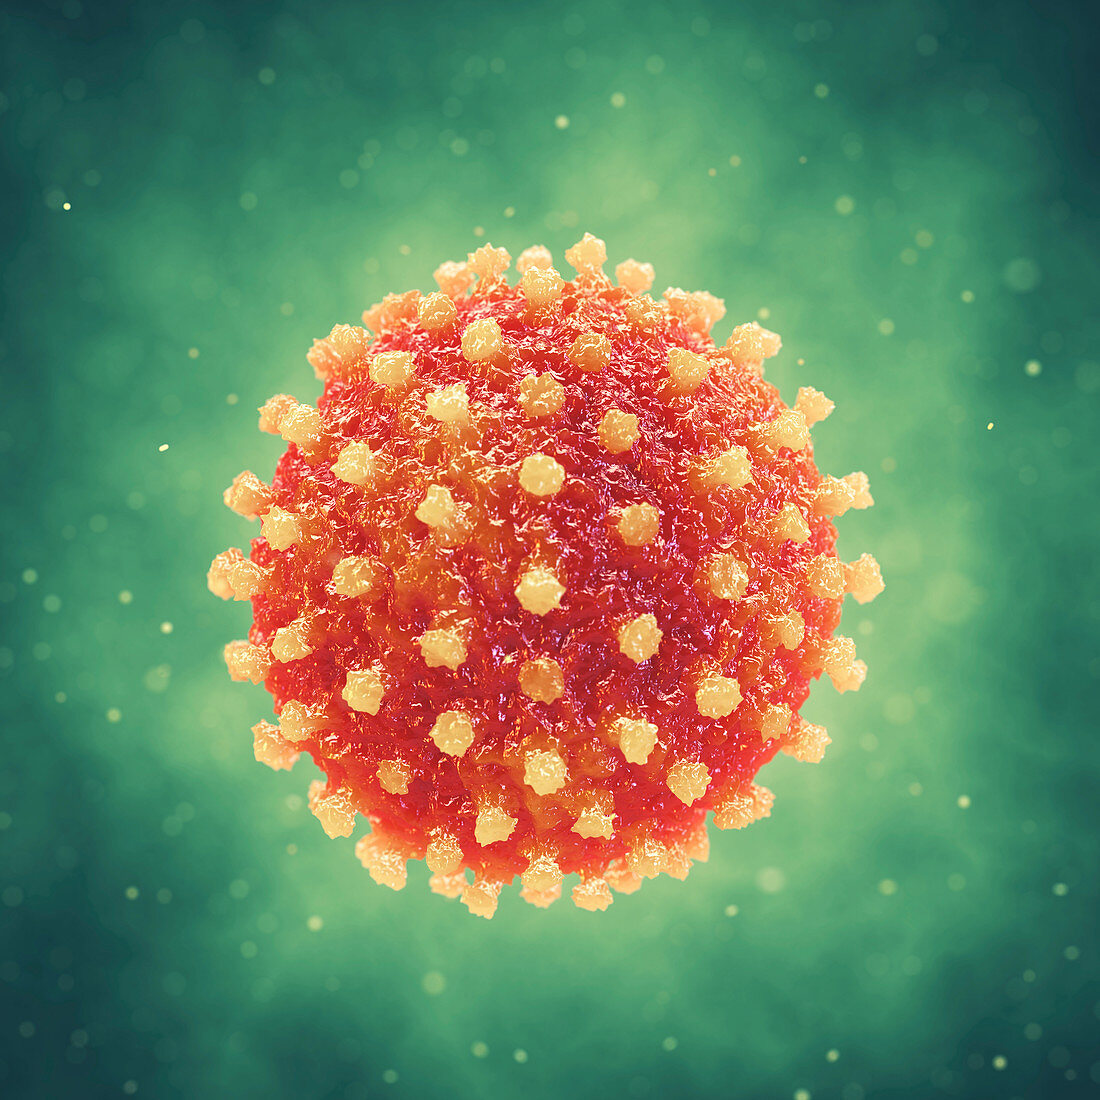 Hepatitis virus, illustration